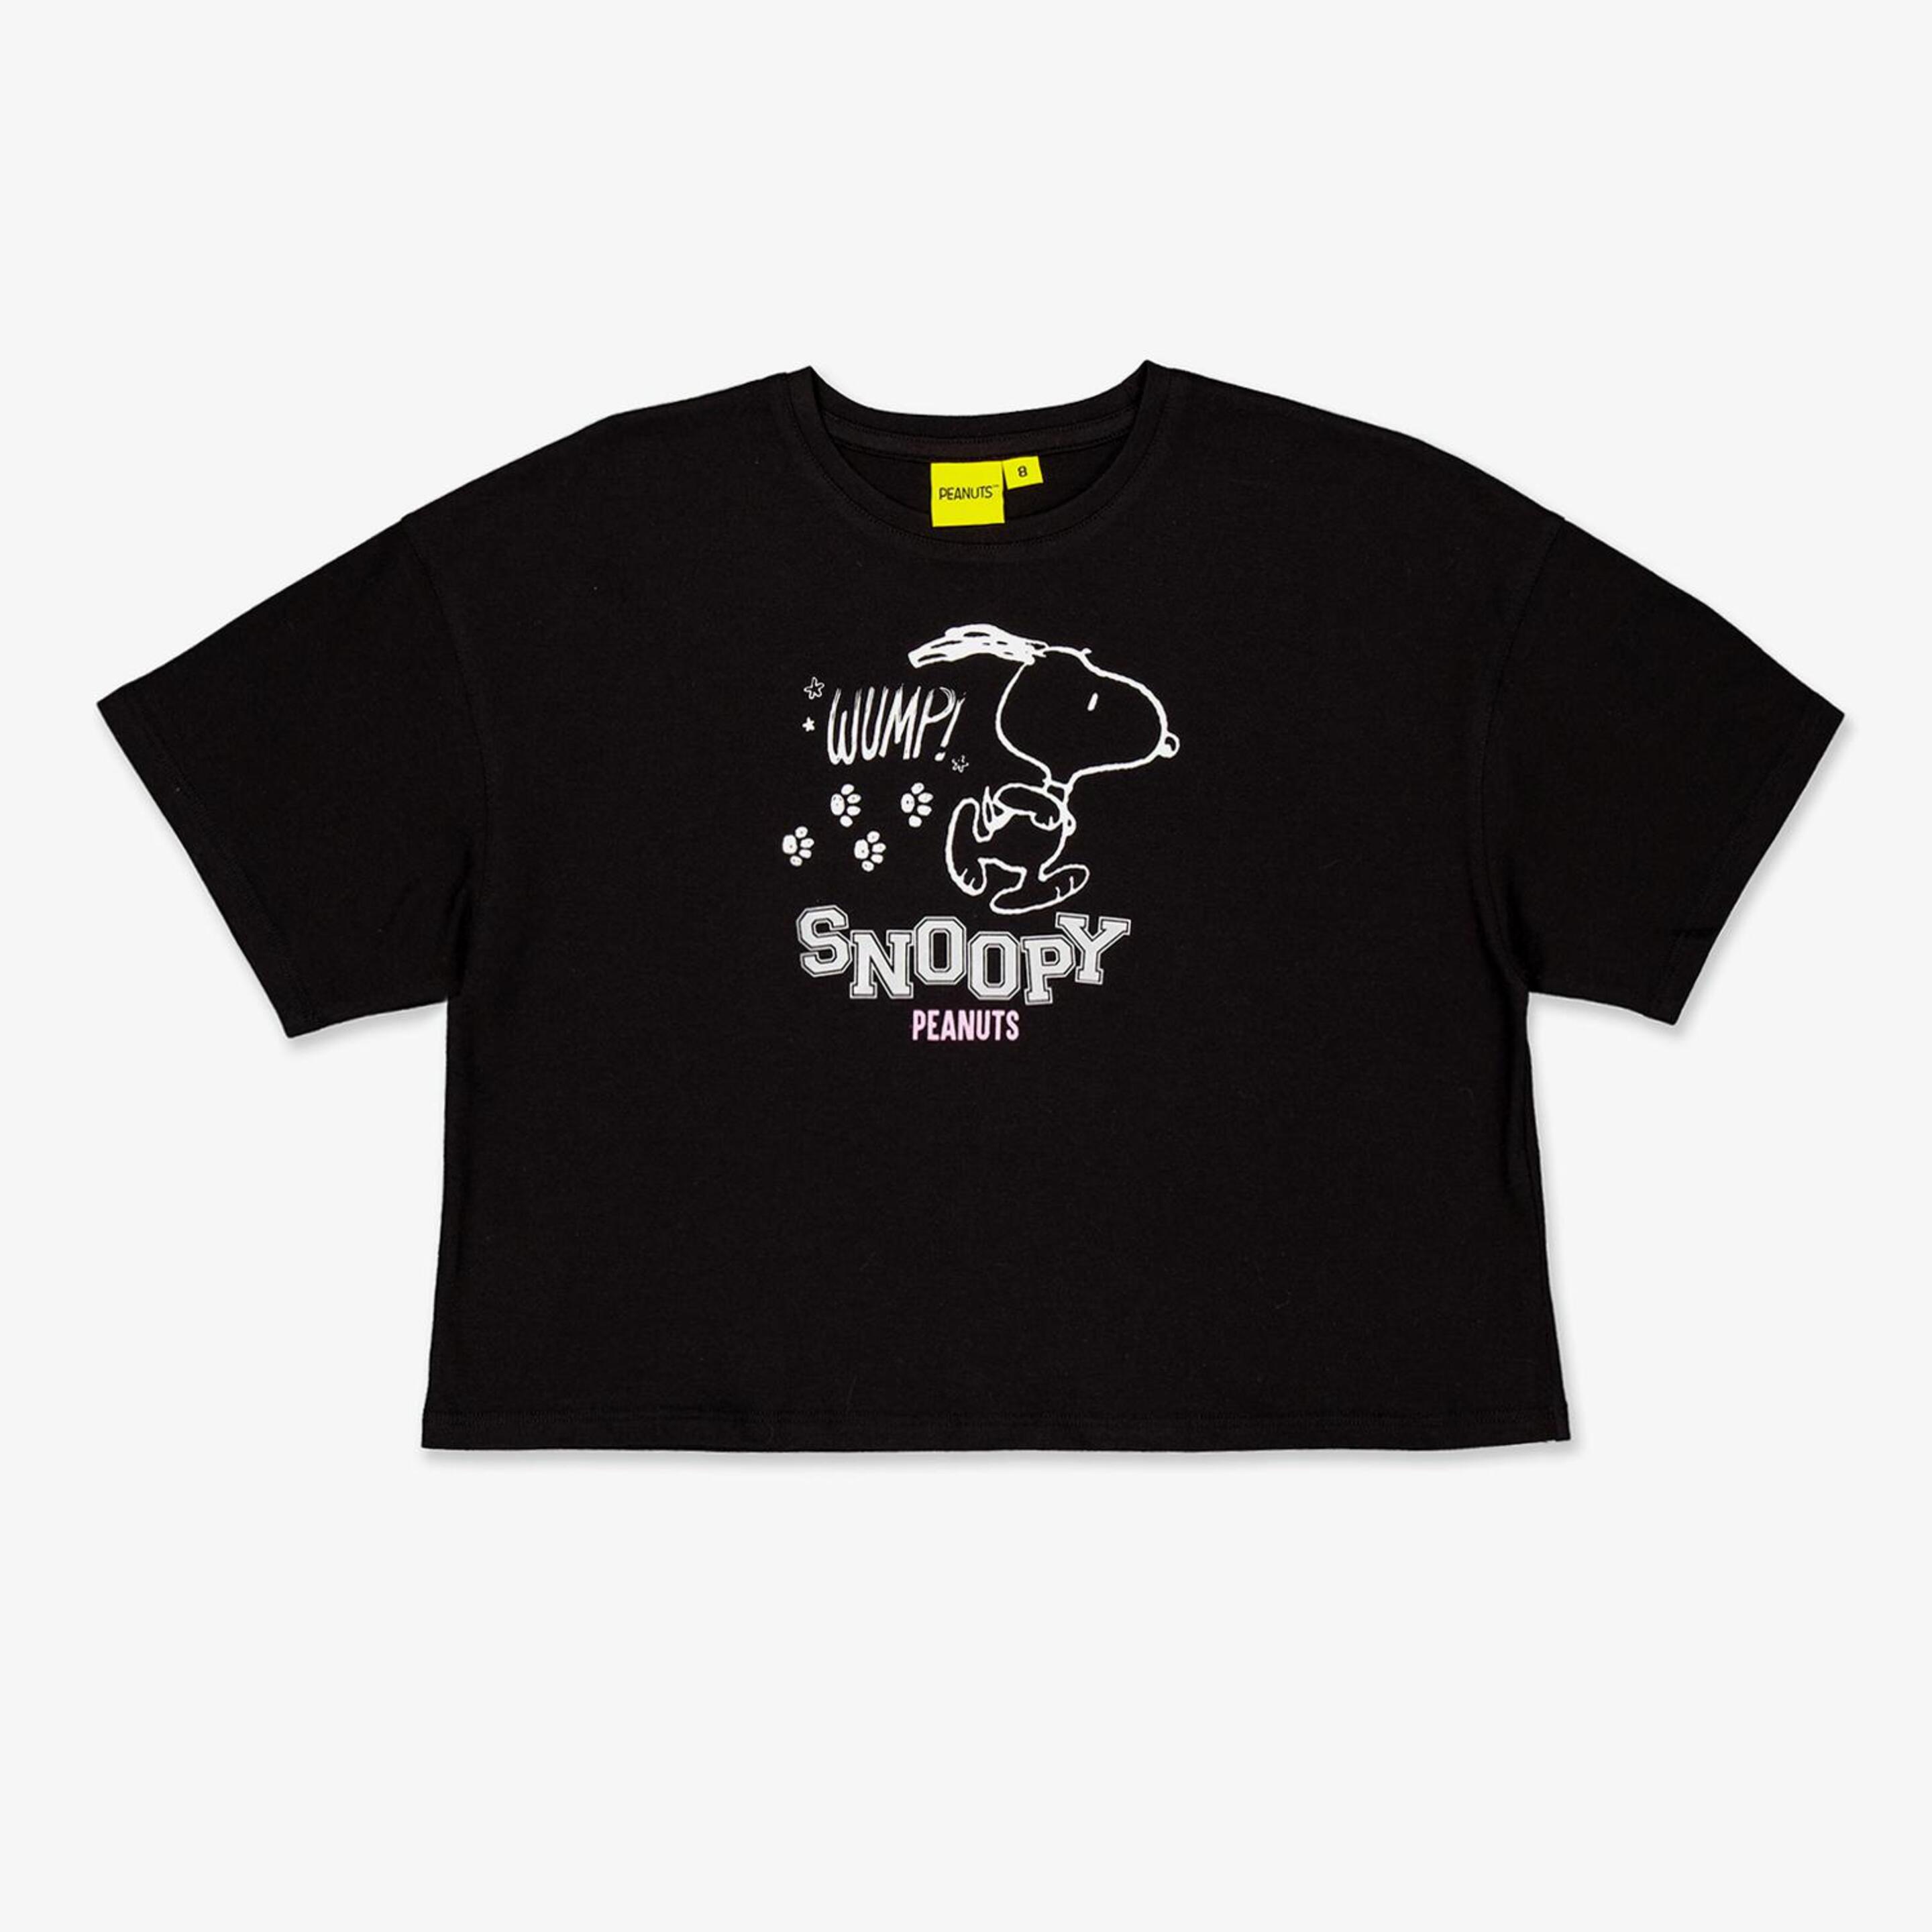 Camiseta Snoopy - negro - Camiseta Crop Niña Peanuts